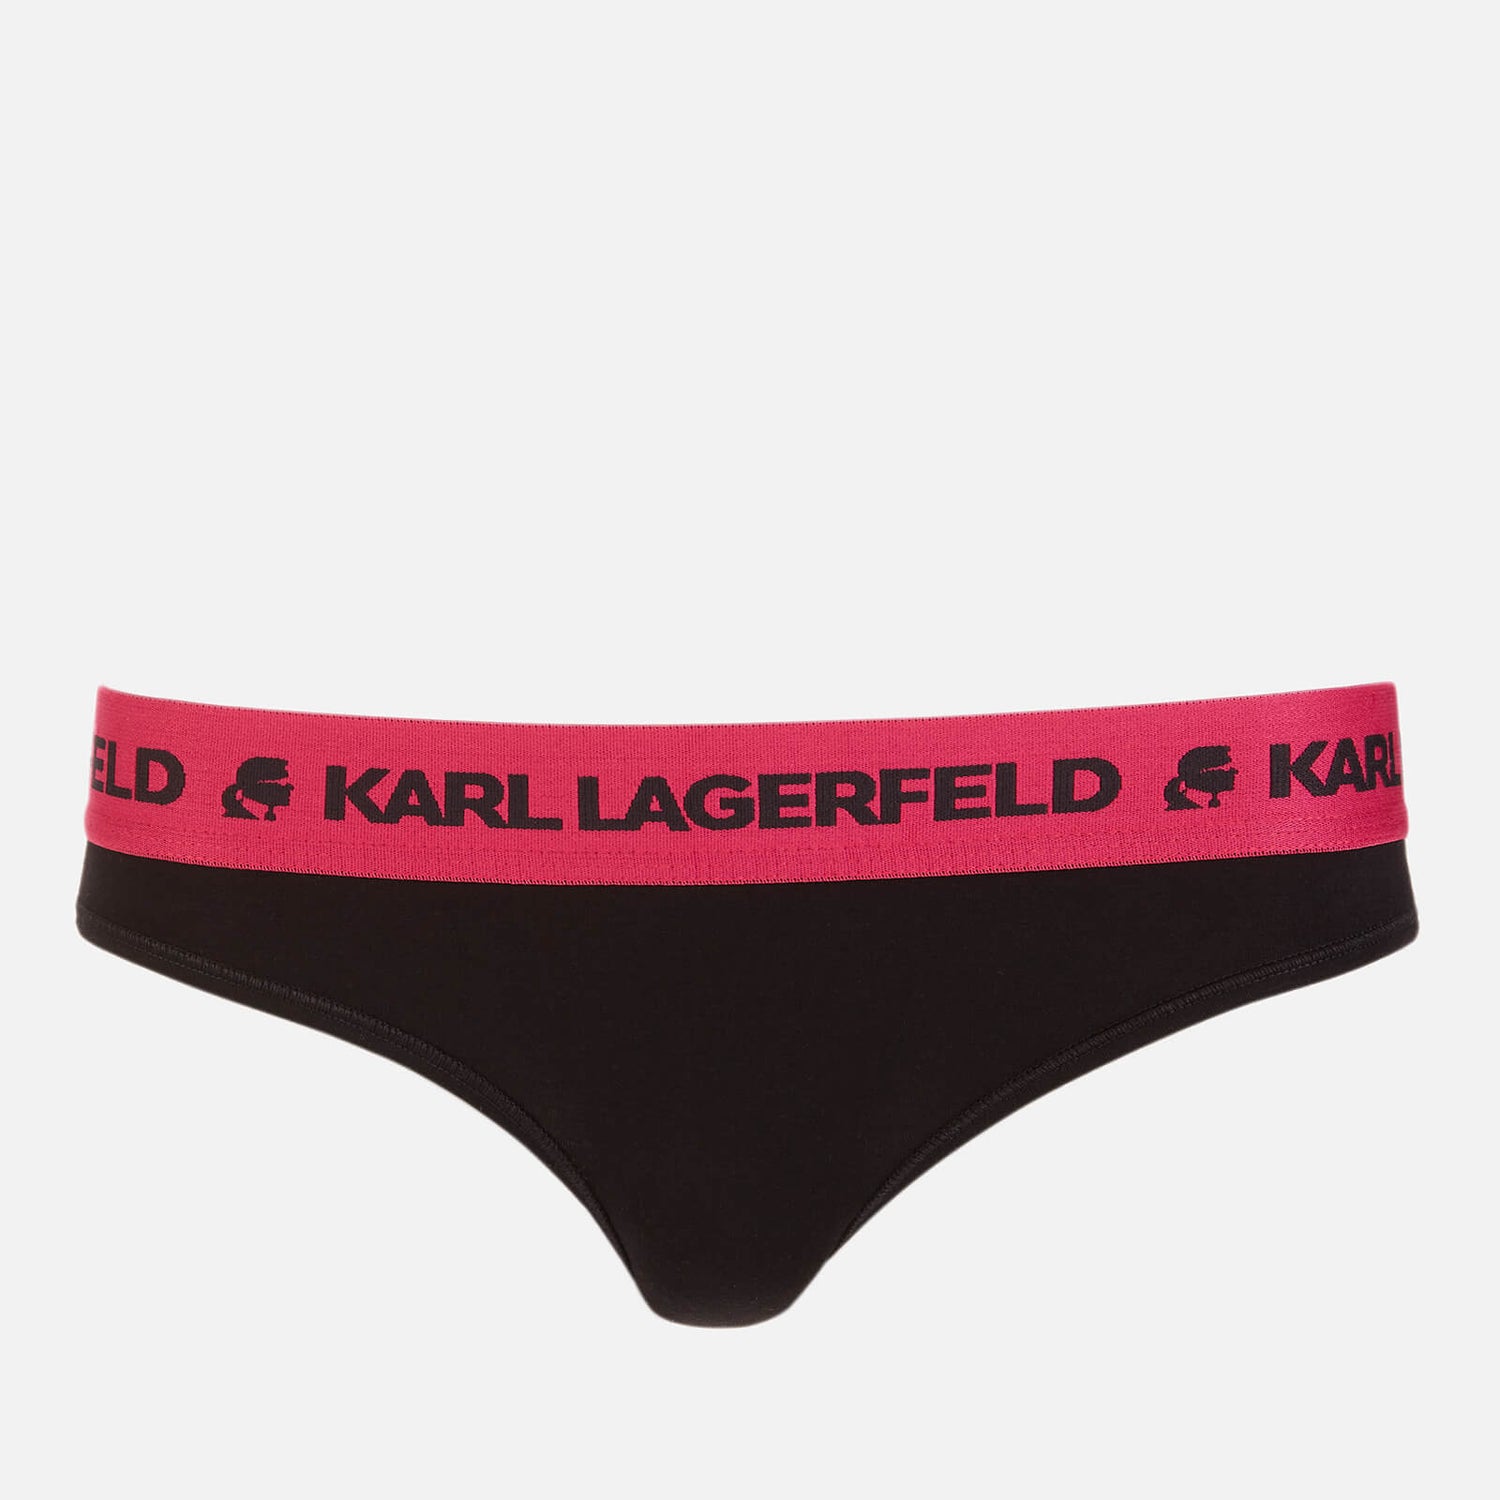 KARL LAGERFELD Women's Logo Briefs - Black/Pink - XS